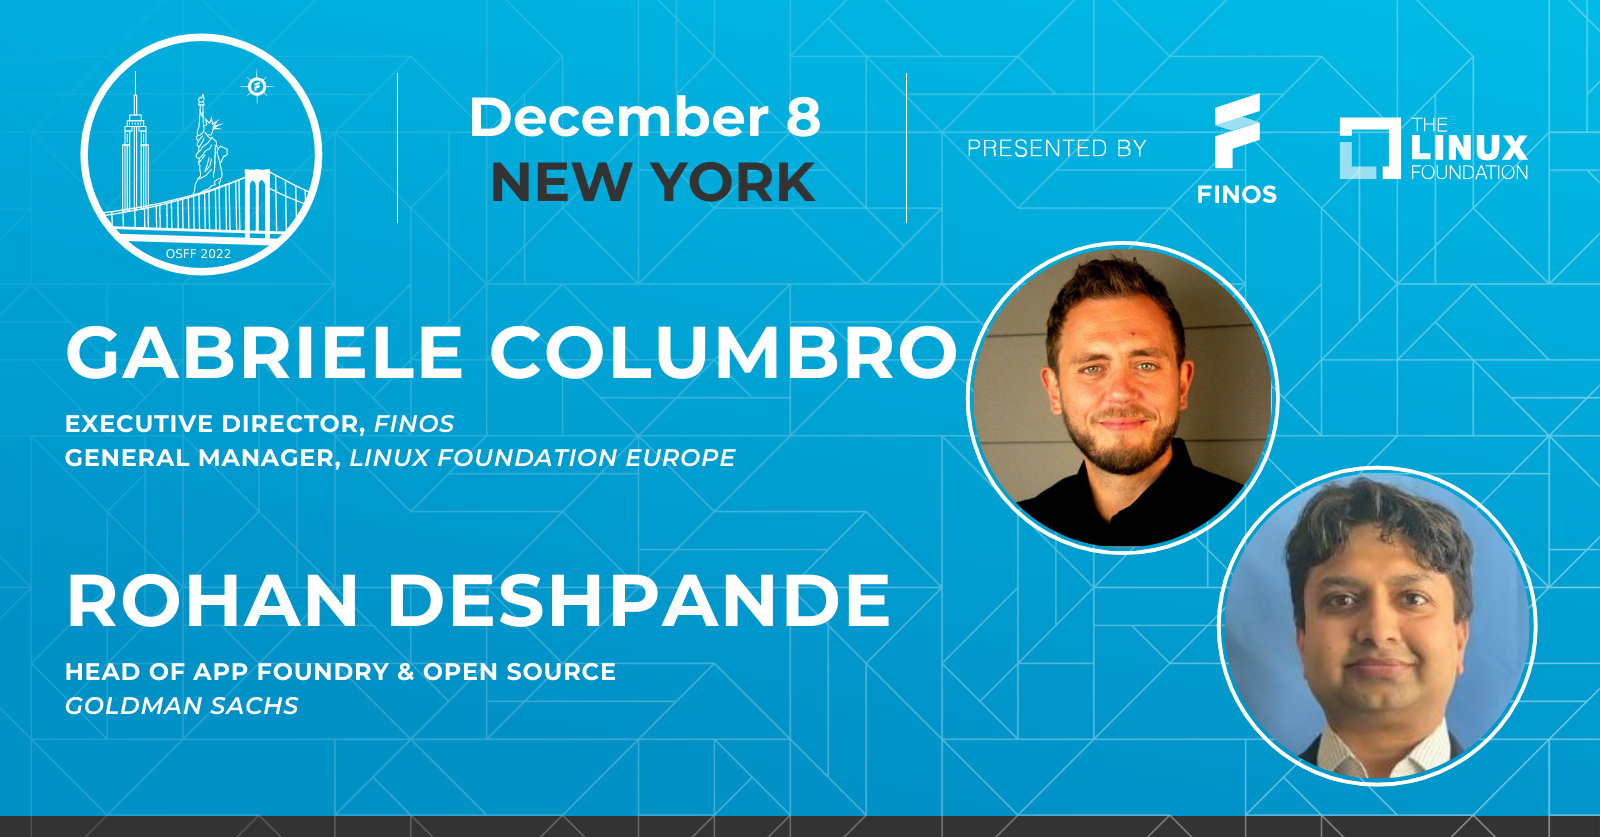 Keynote: Fireside Chat with Gabriele Columbro & Rohan Deshpande